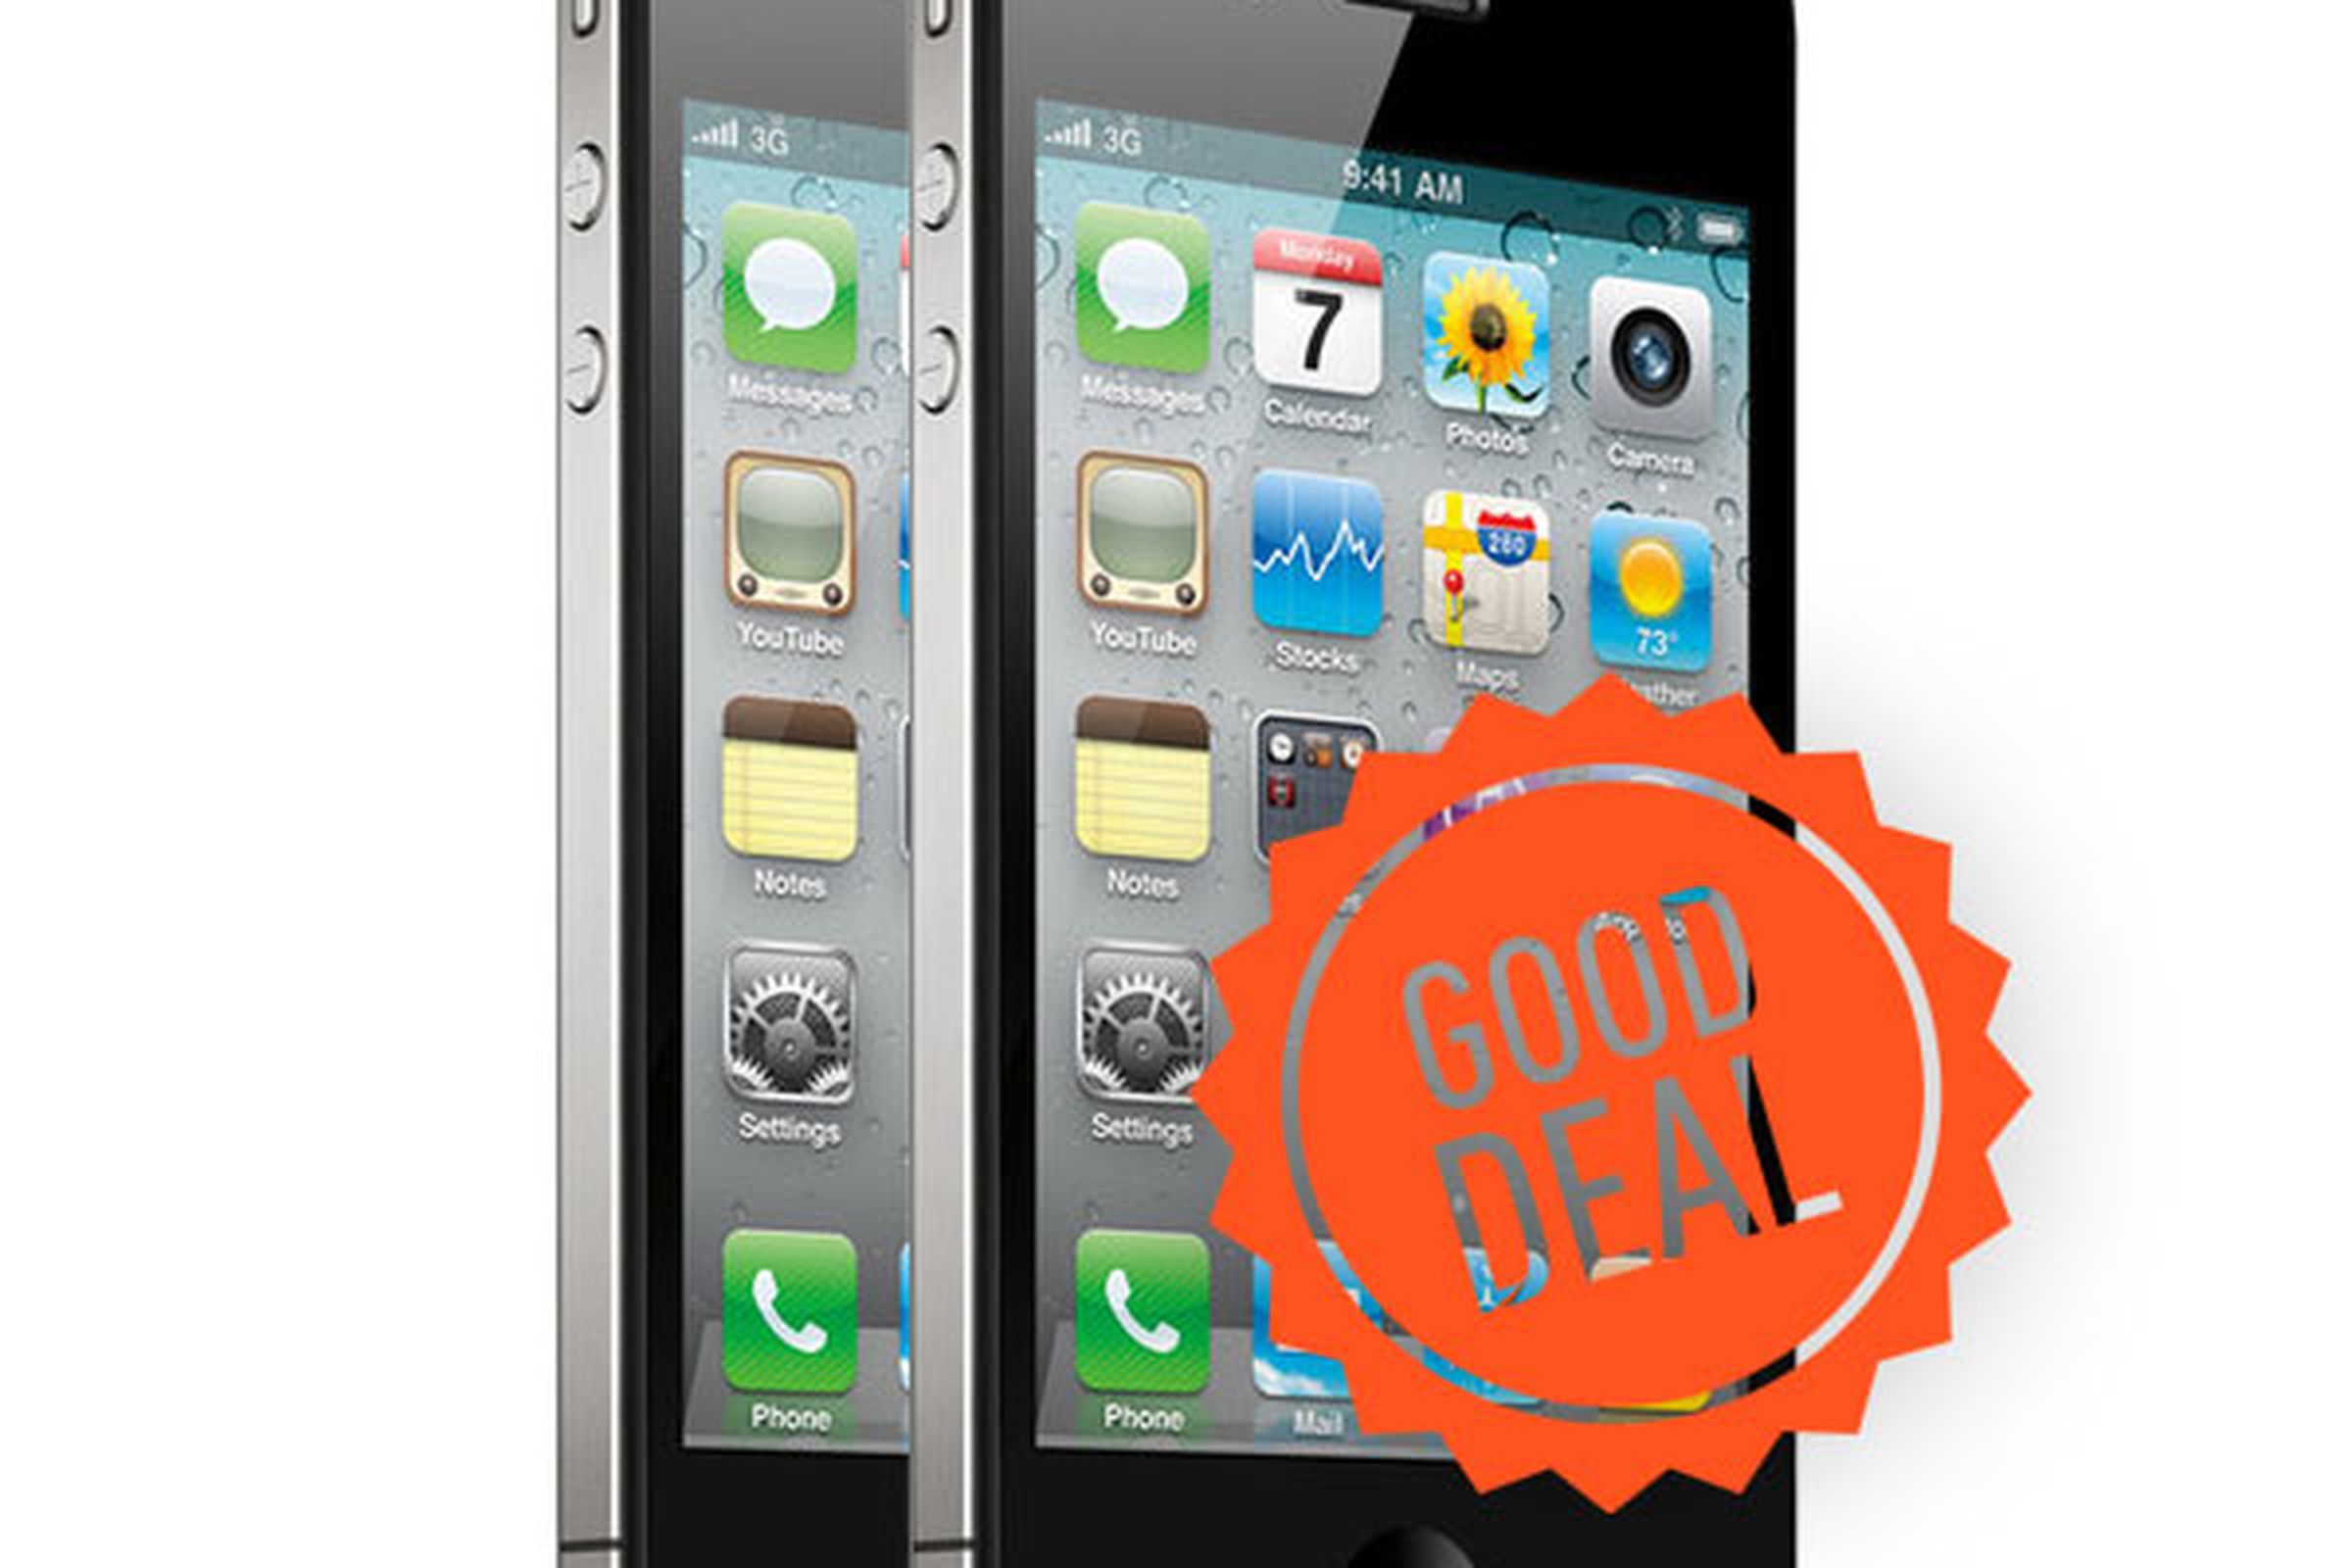 iPhone 4 BOGO Good deal